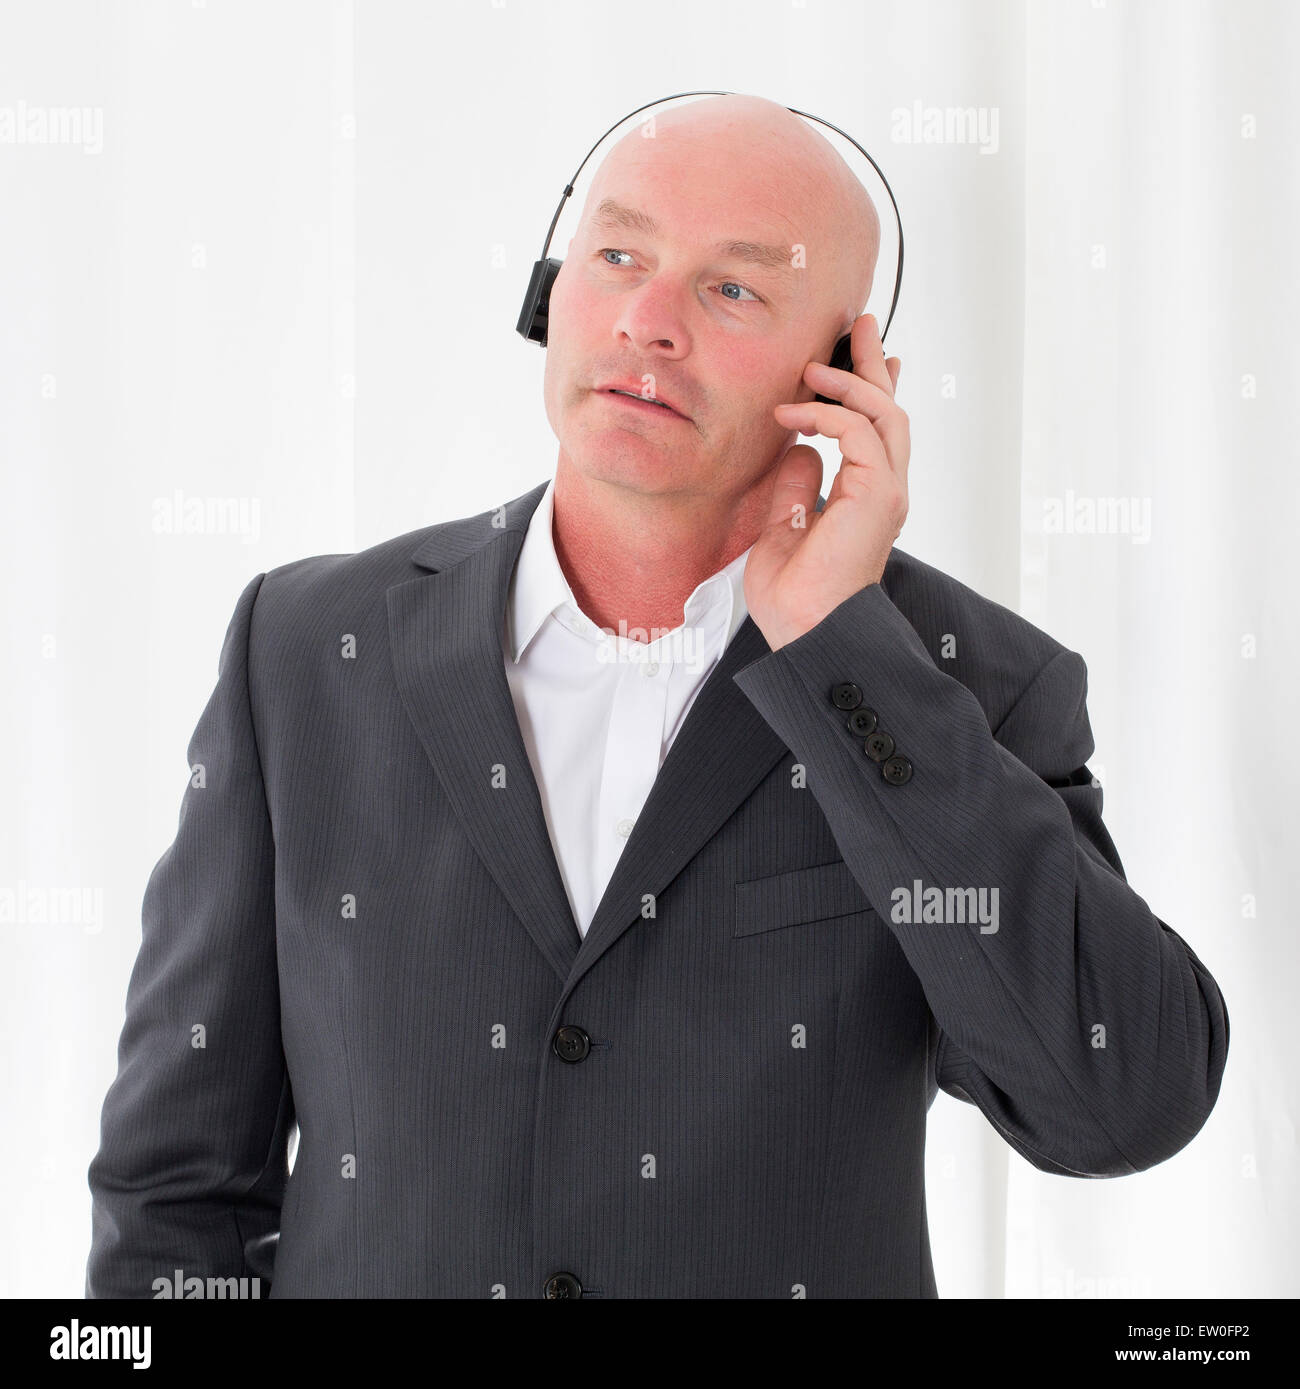 bald-headed businessman with headphones Stock Photo